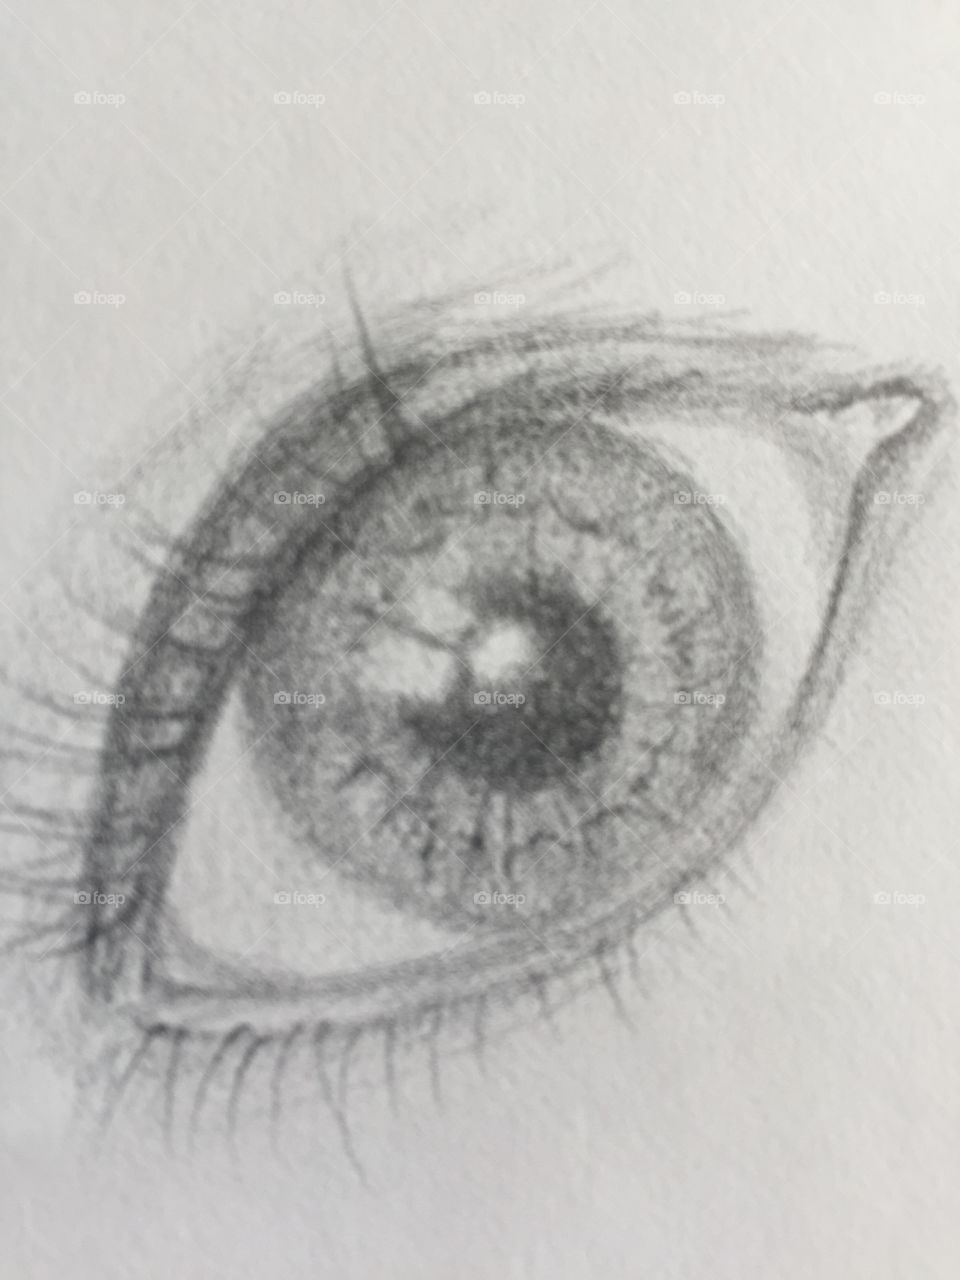 Sketch of the eye